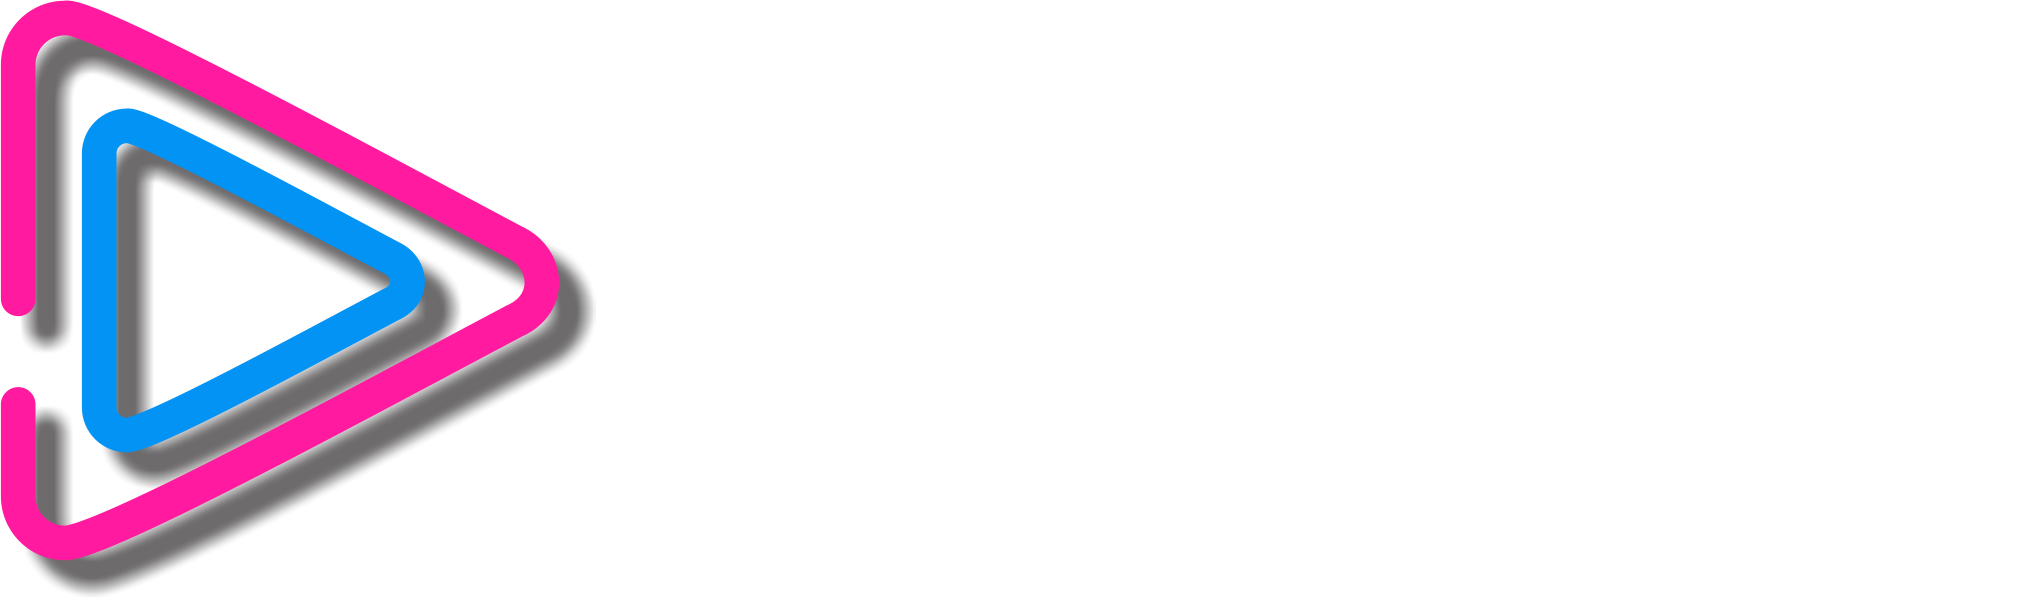 Tahaduth my video